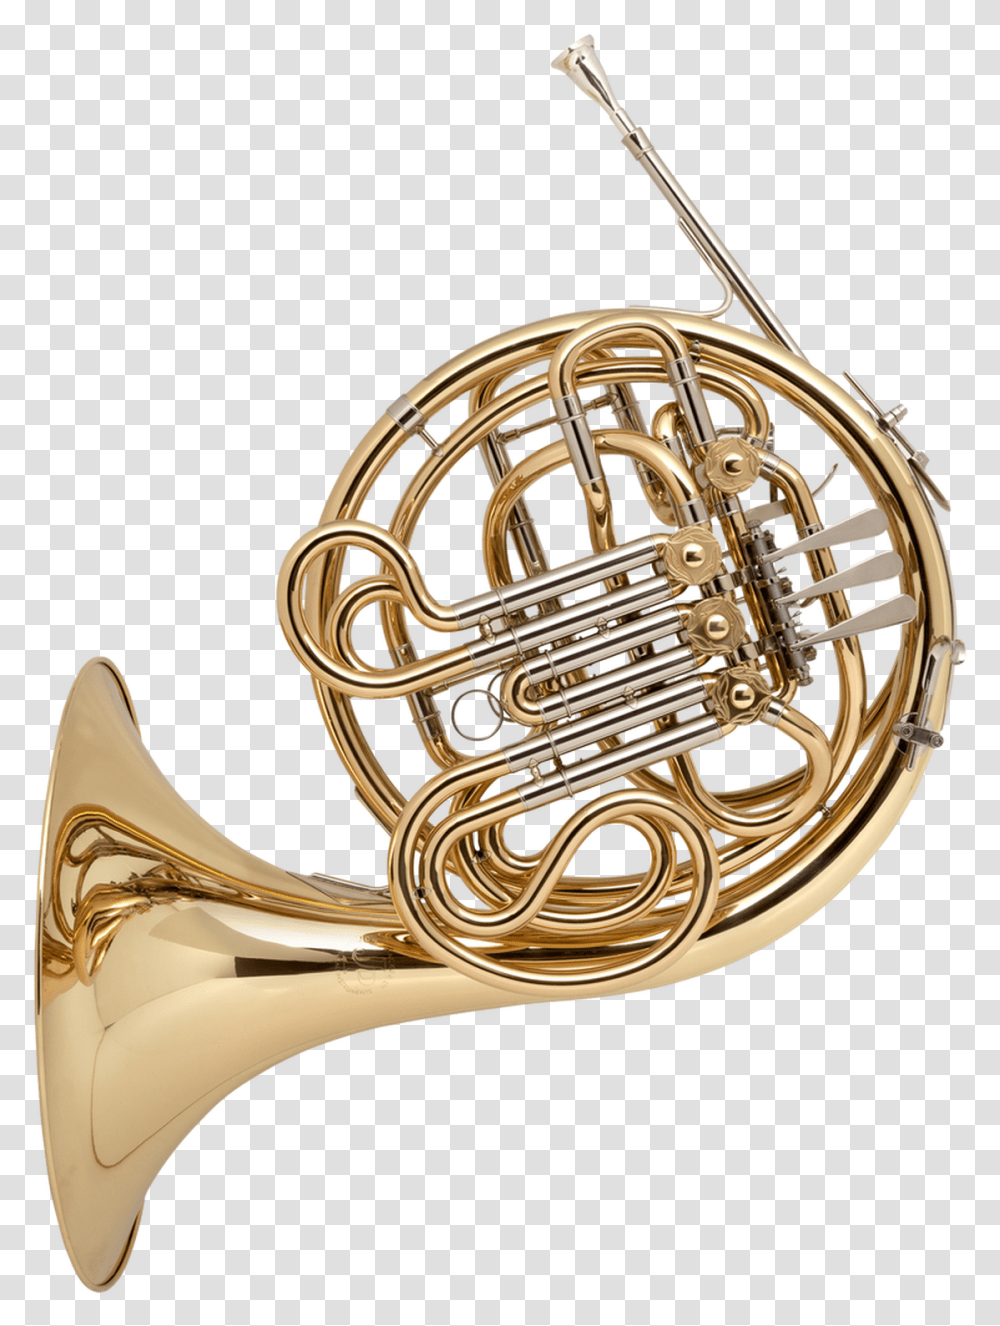 John Packer Jp164 Double Bbf French Horn John Packer French Horn, Brass Section, Musical Instrument Transparent Png